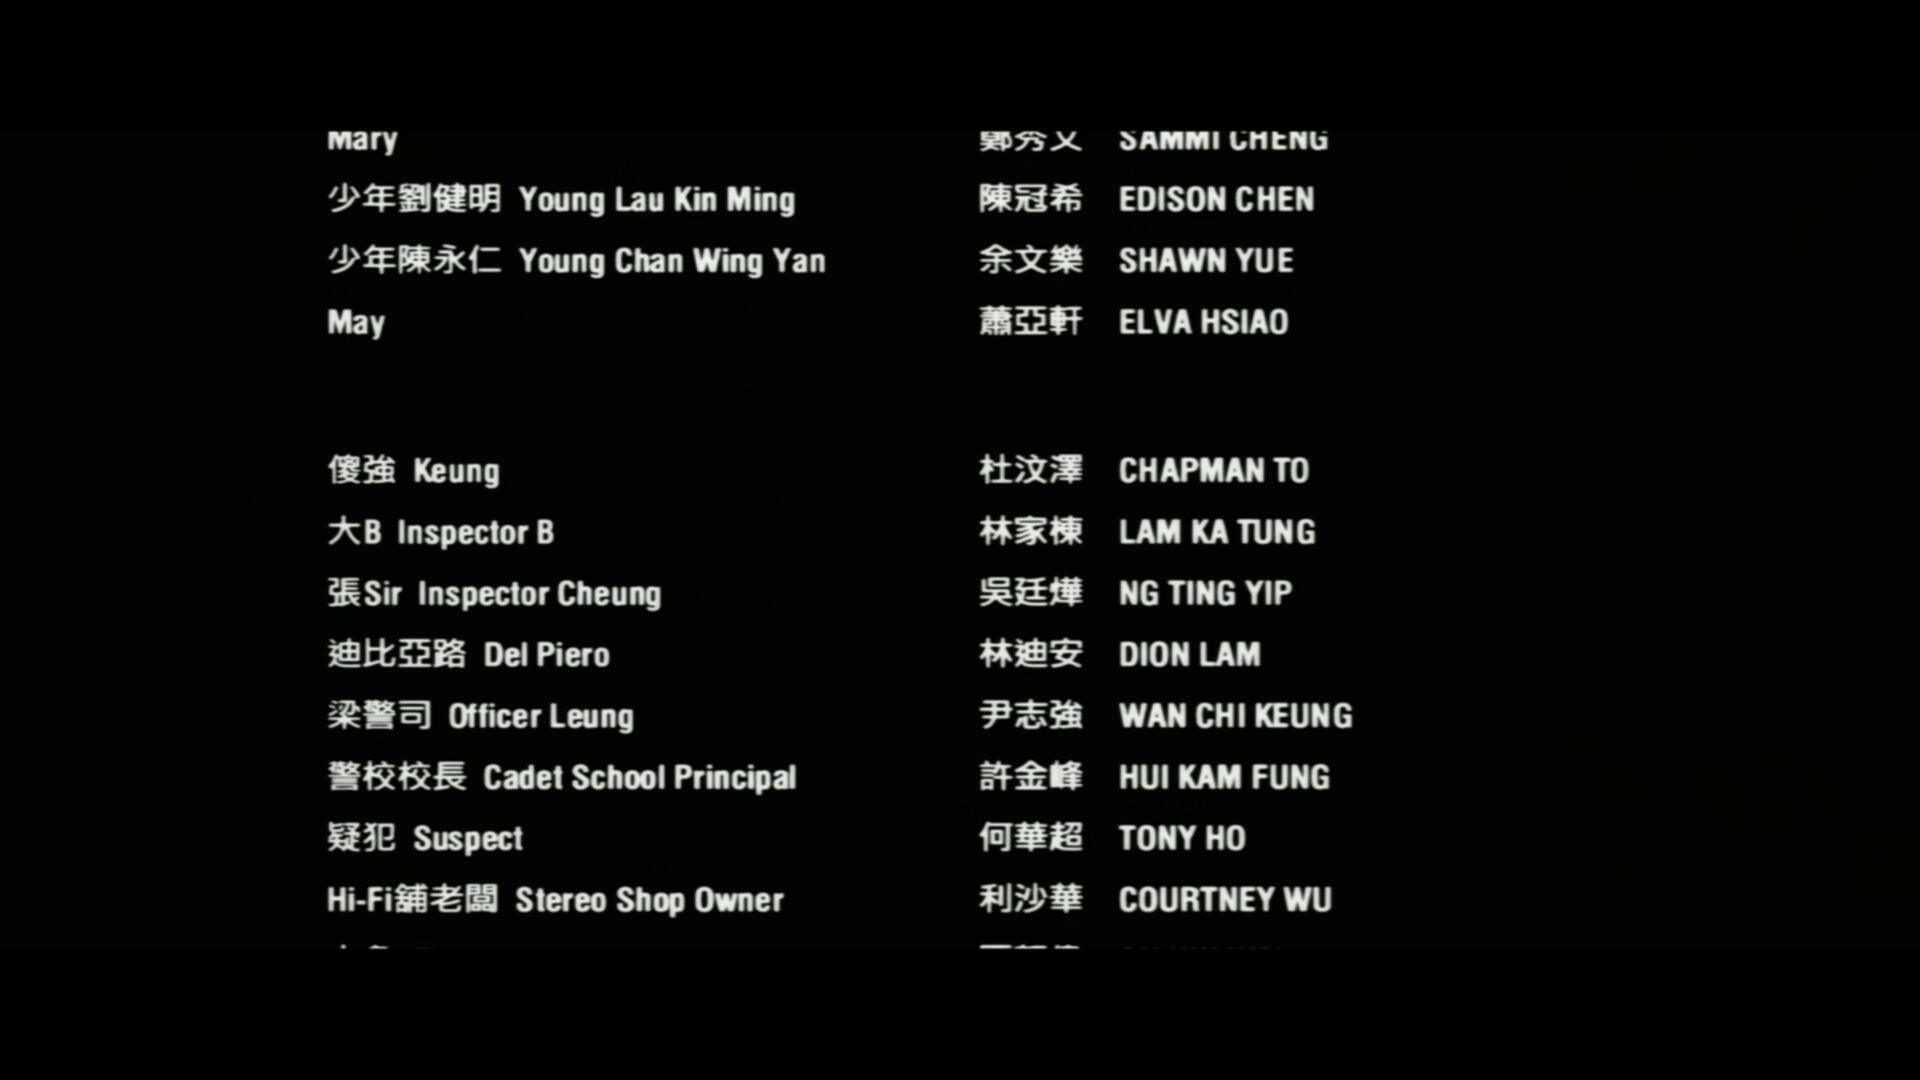 Infernal Affairs 2002 CHINESE REMASTERED 1080p BluRay DDP5 1 x265 10bit GalaxyRG265